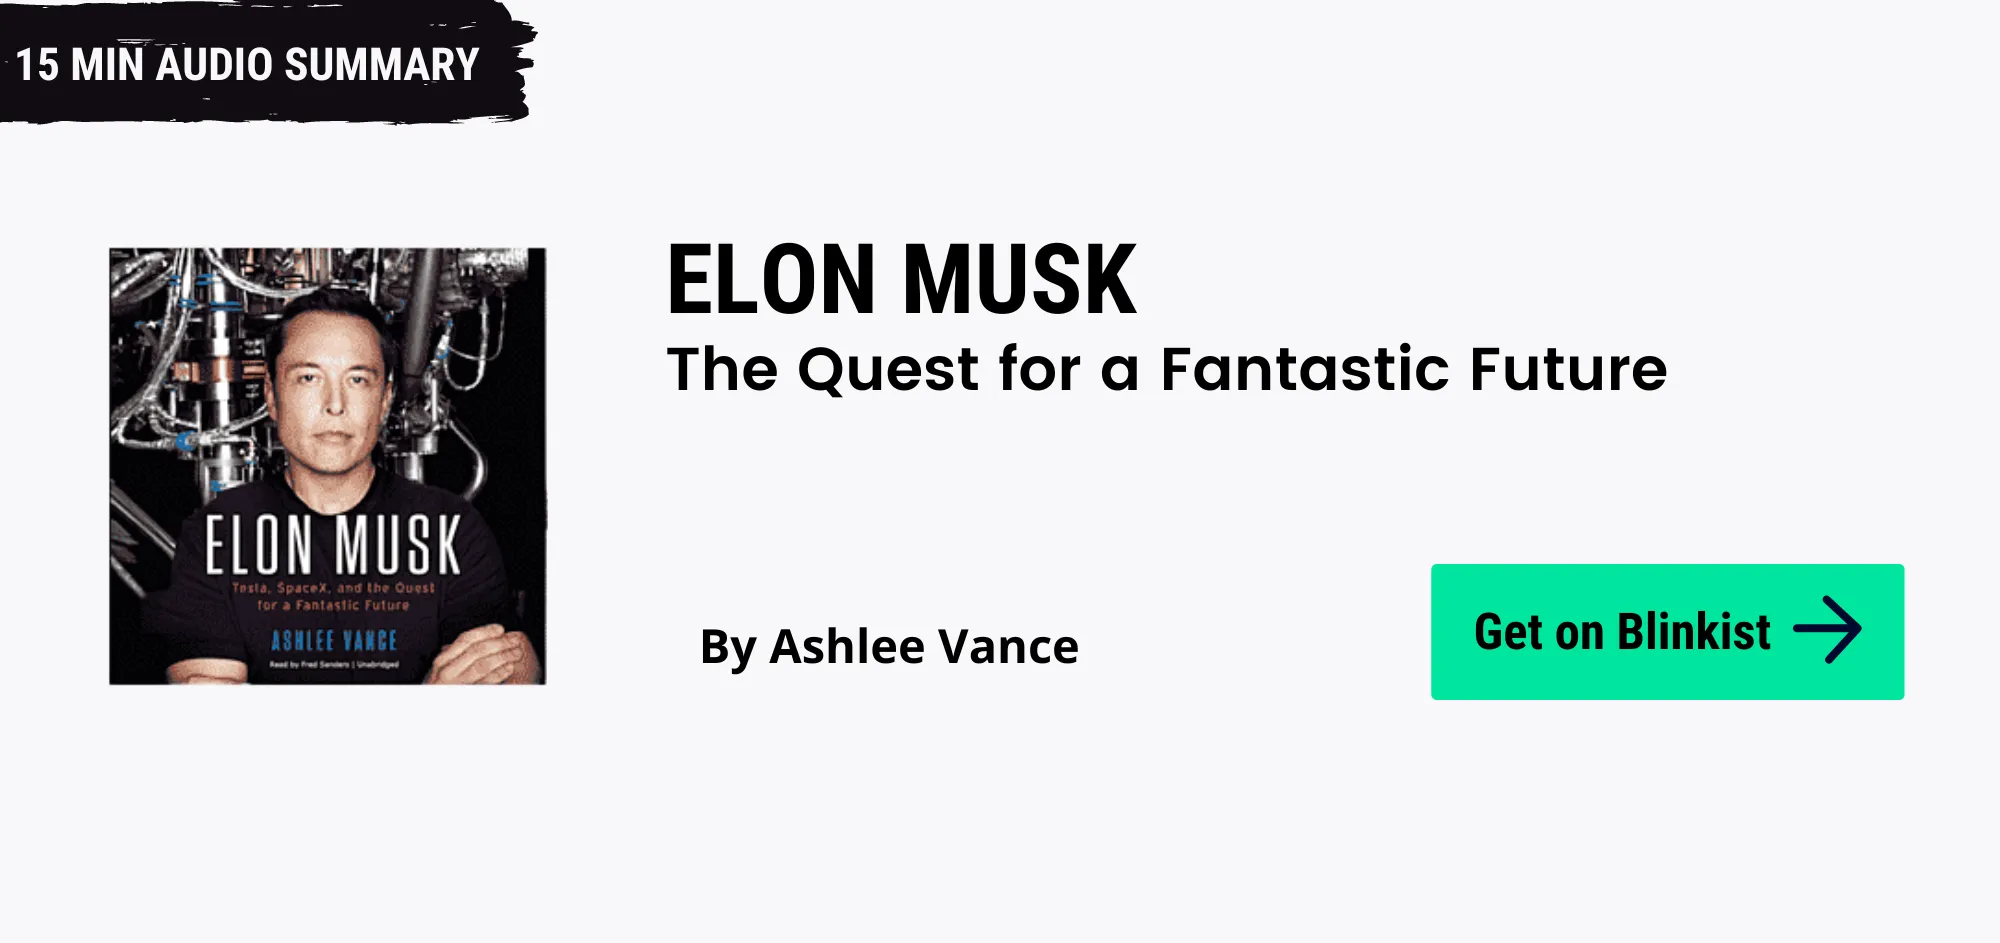 Elon musk by ashlee vance